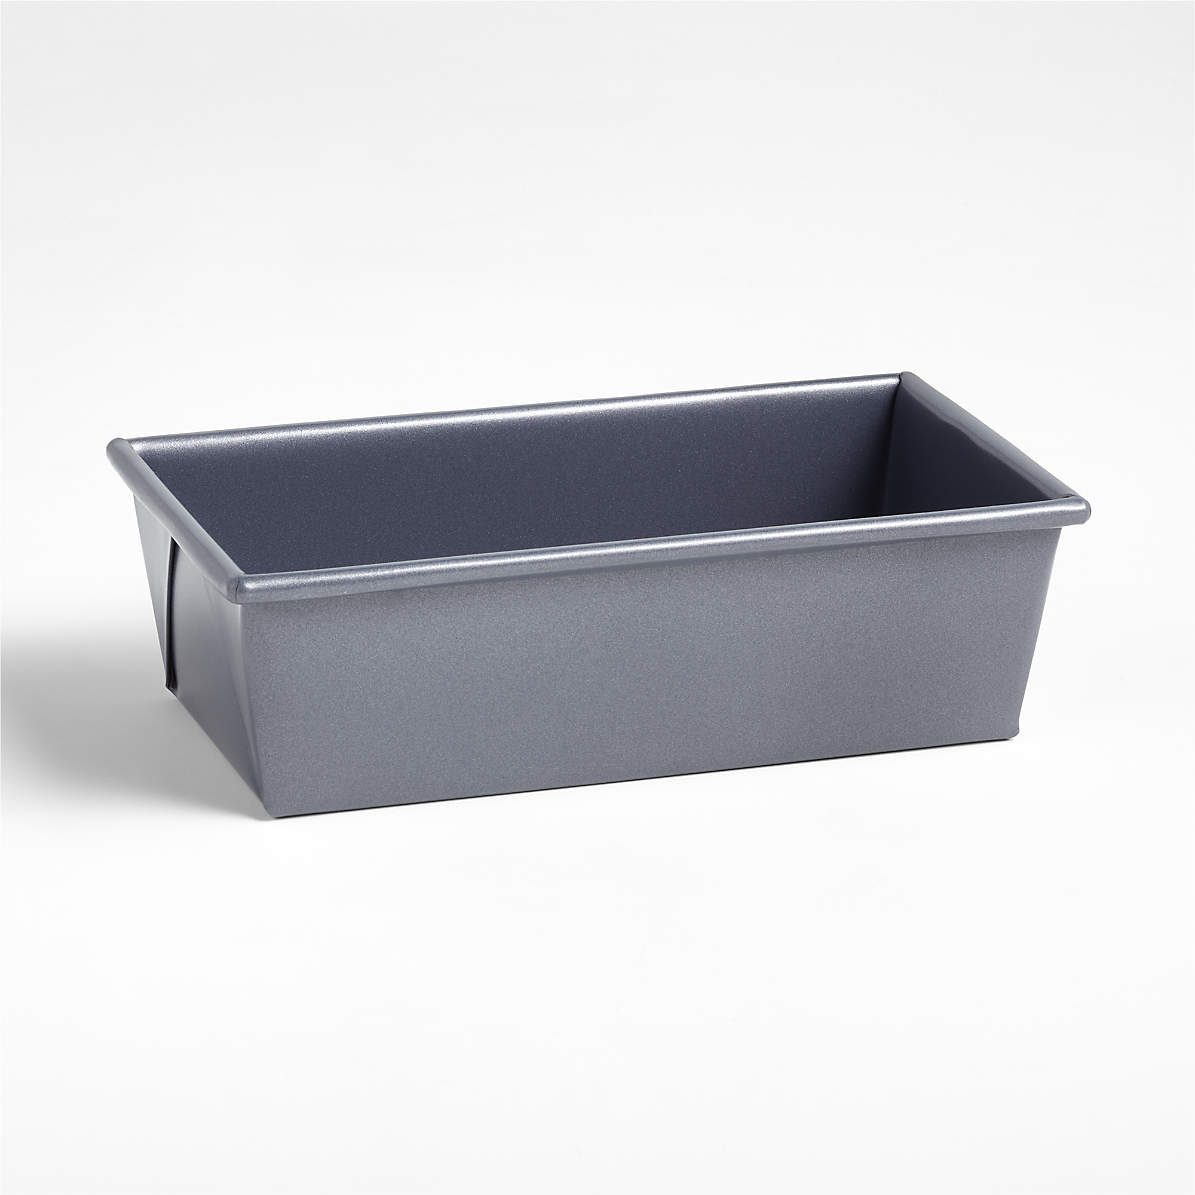 Snel functie specificeren Crate & Barrel Slate Blue Loaf Pan + Reviews | Crate & Barrel